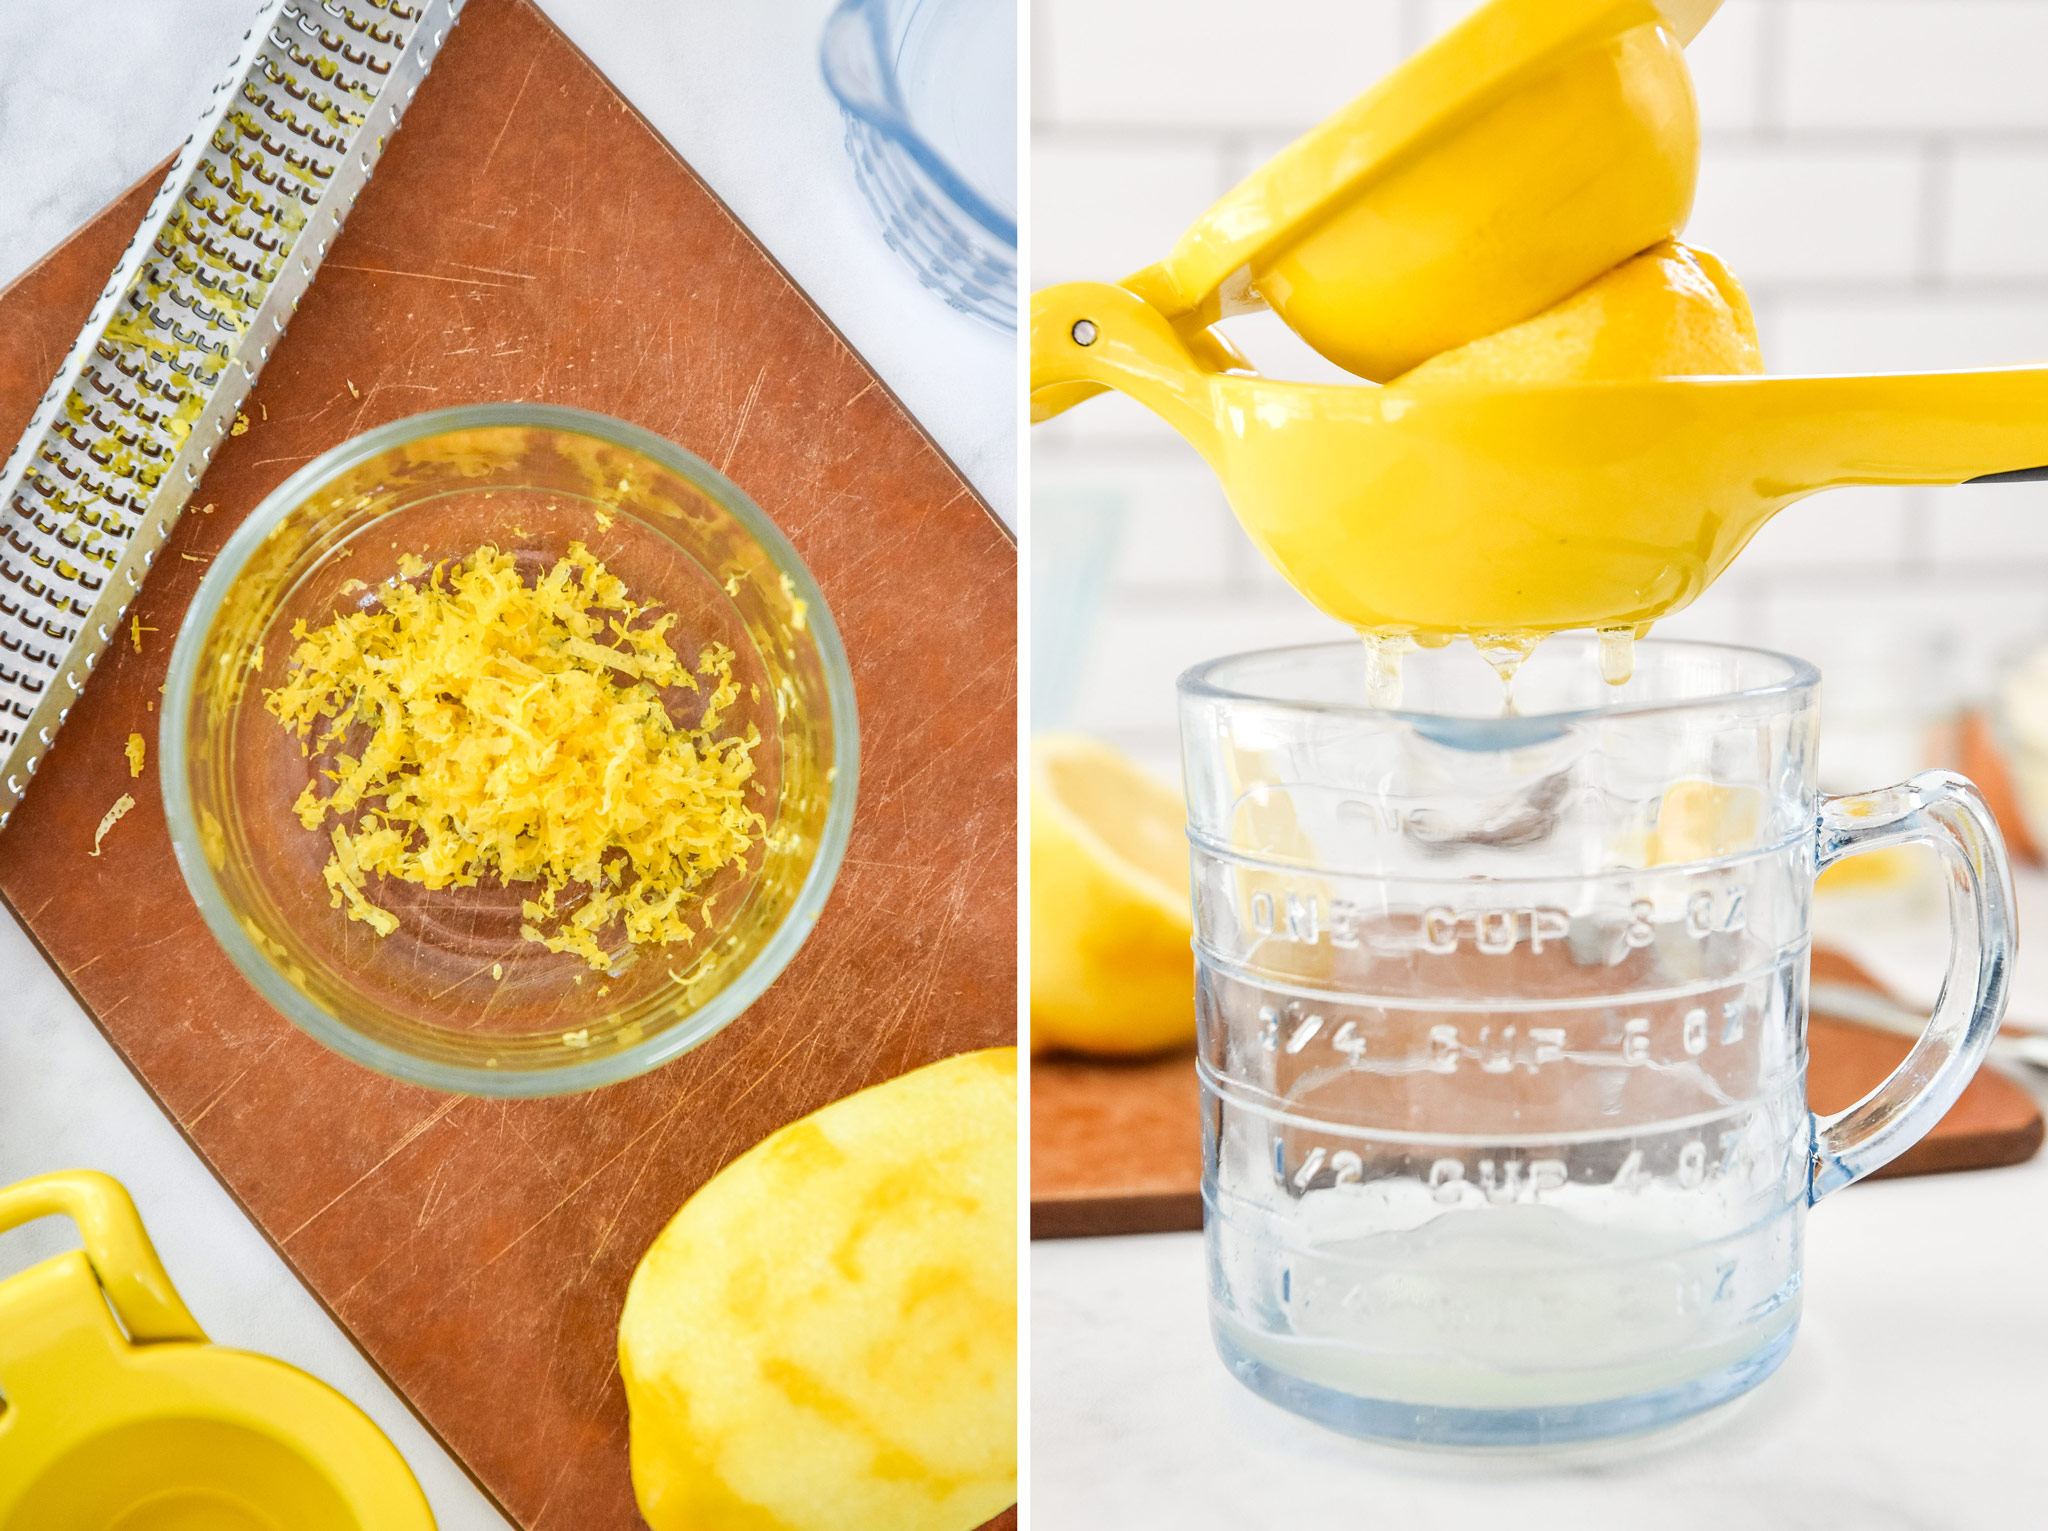 zesting and juicing a lemon.